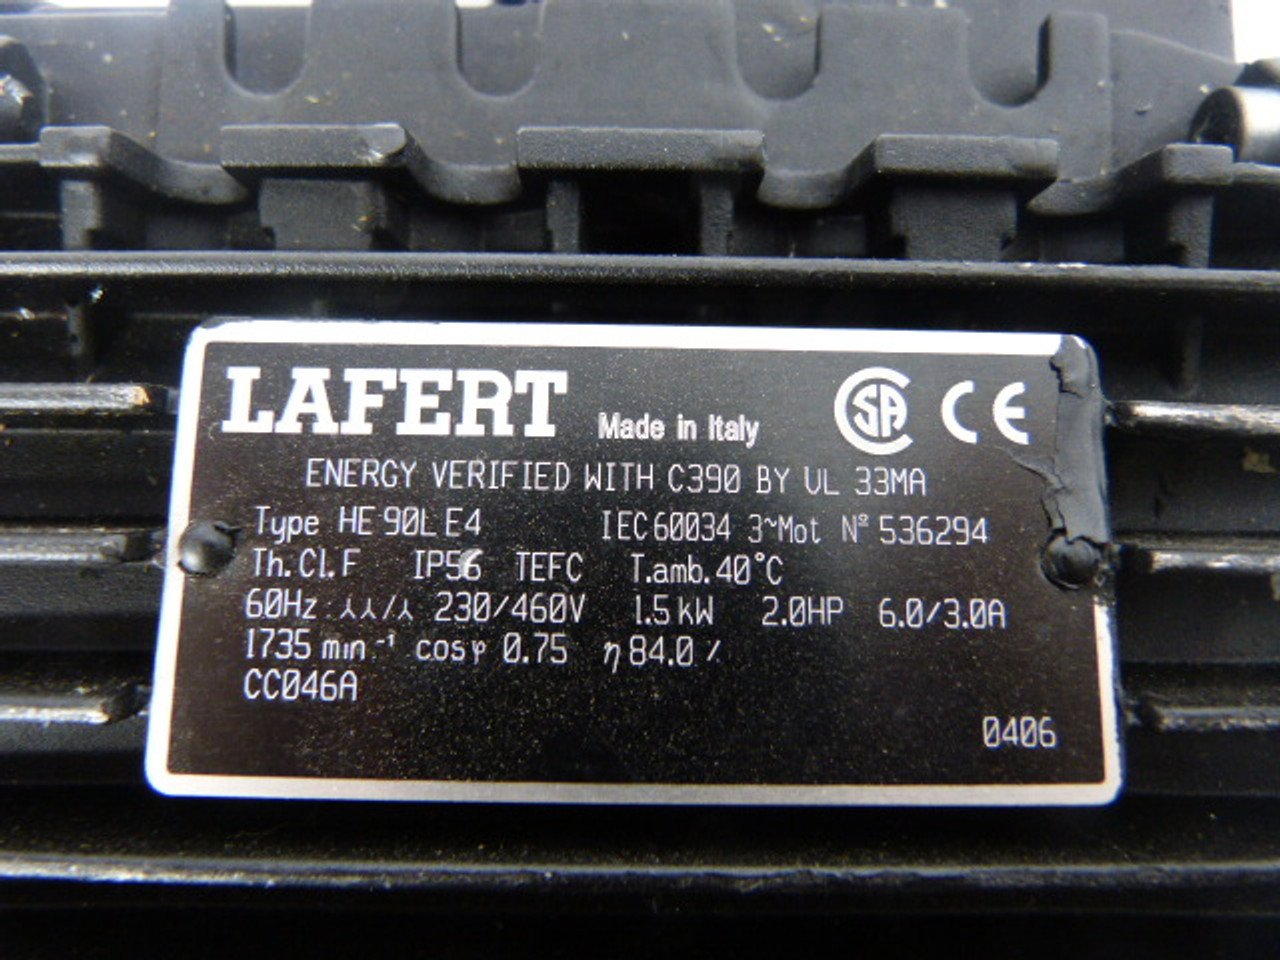 Lafert 2.0HP 1800RPM 230/460V 90L TEFC 3Ph 6.0/3.0A 60Hz USED